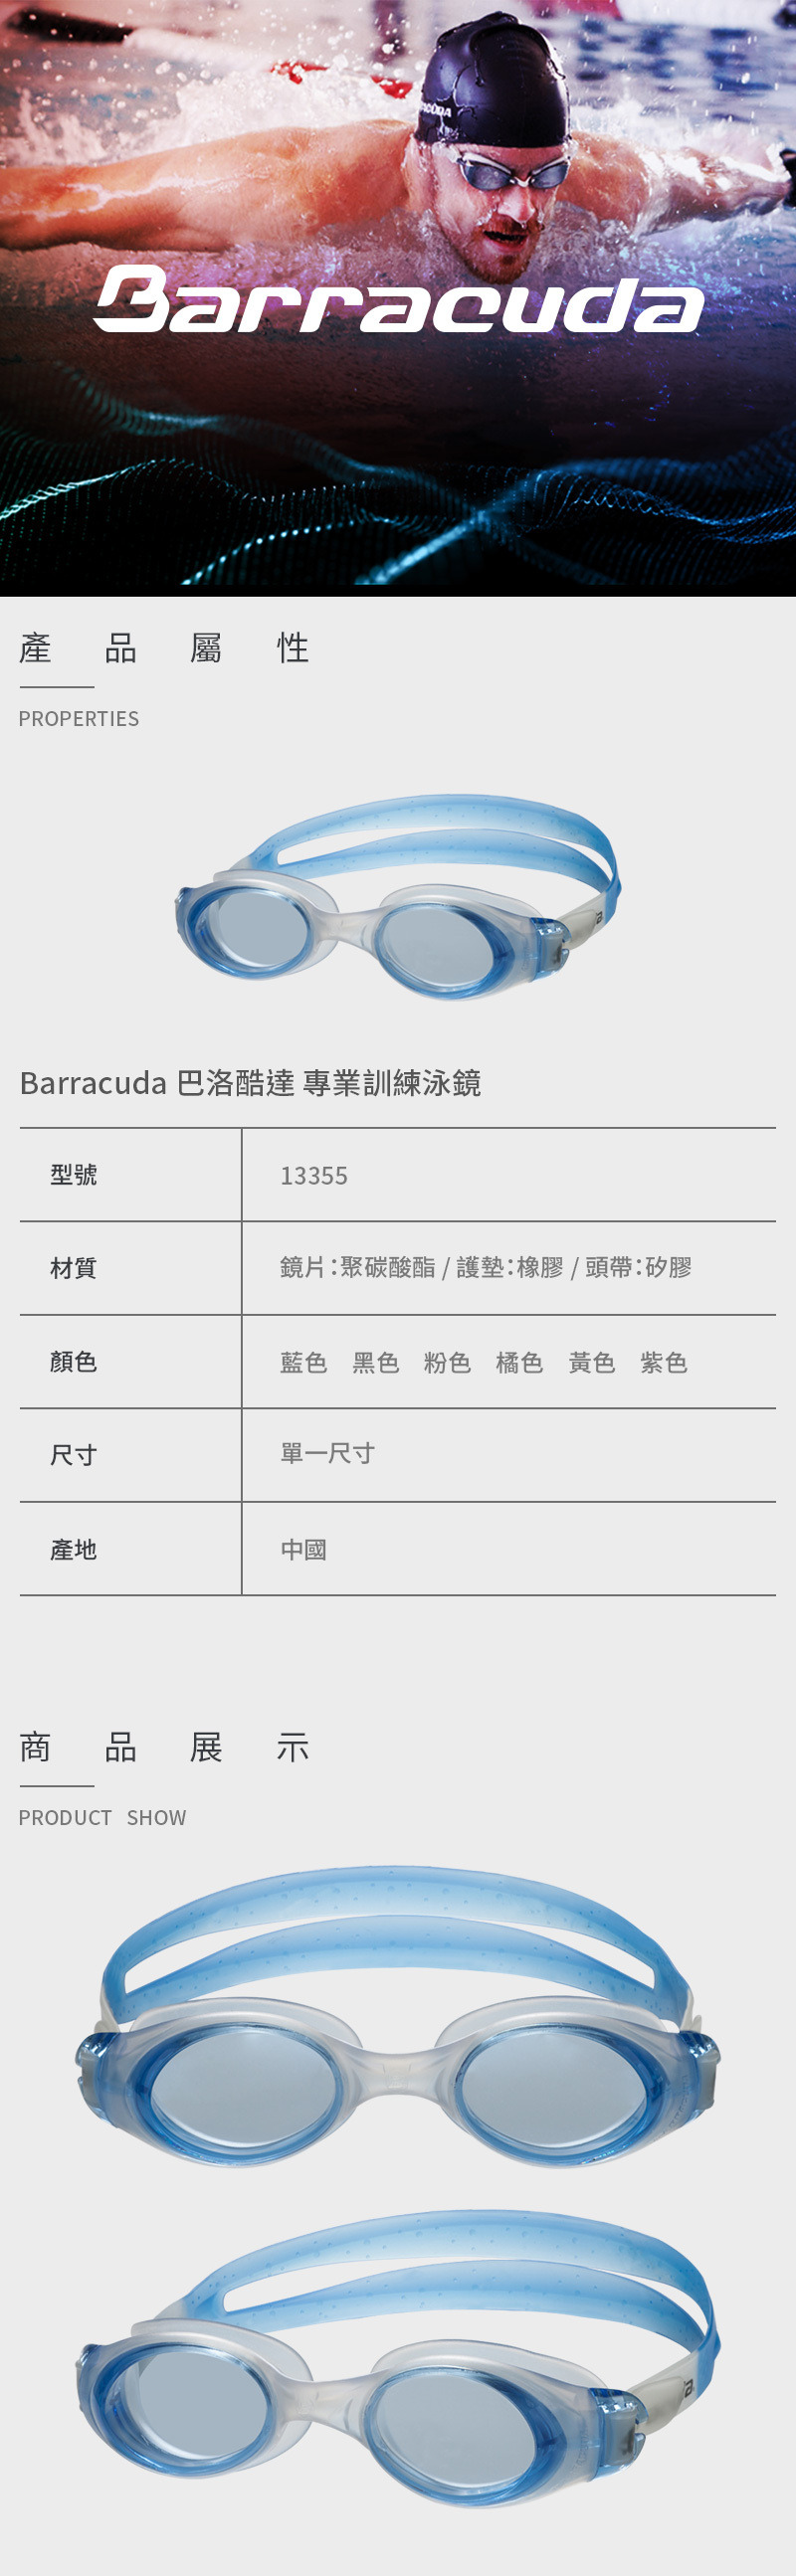 【Barracuda 巴洛酷達】專業訓練泳鏡 13355